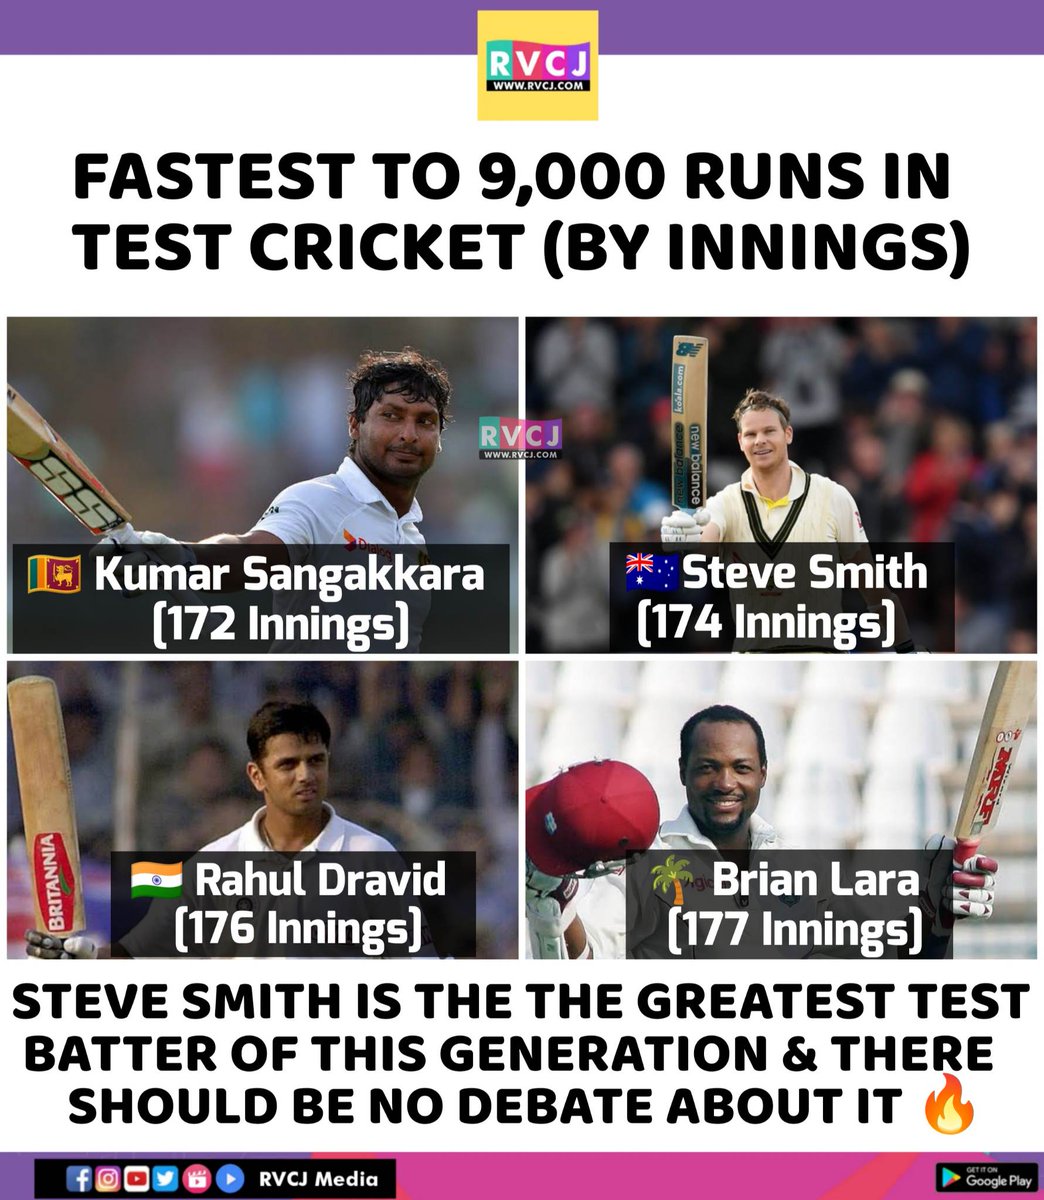 Fastest to Score 9,000 Test Runs
#Ashes #ENGvAUS